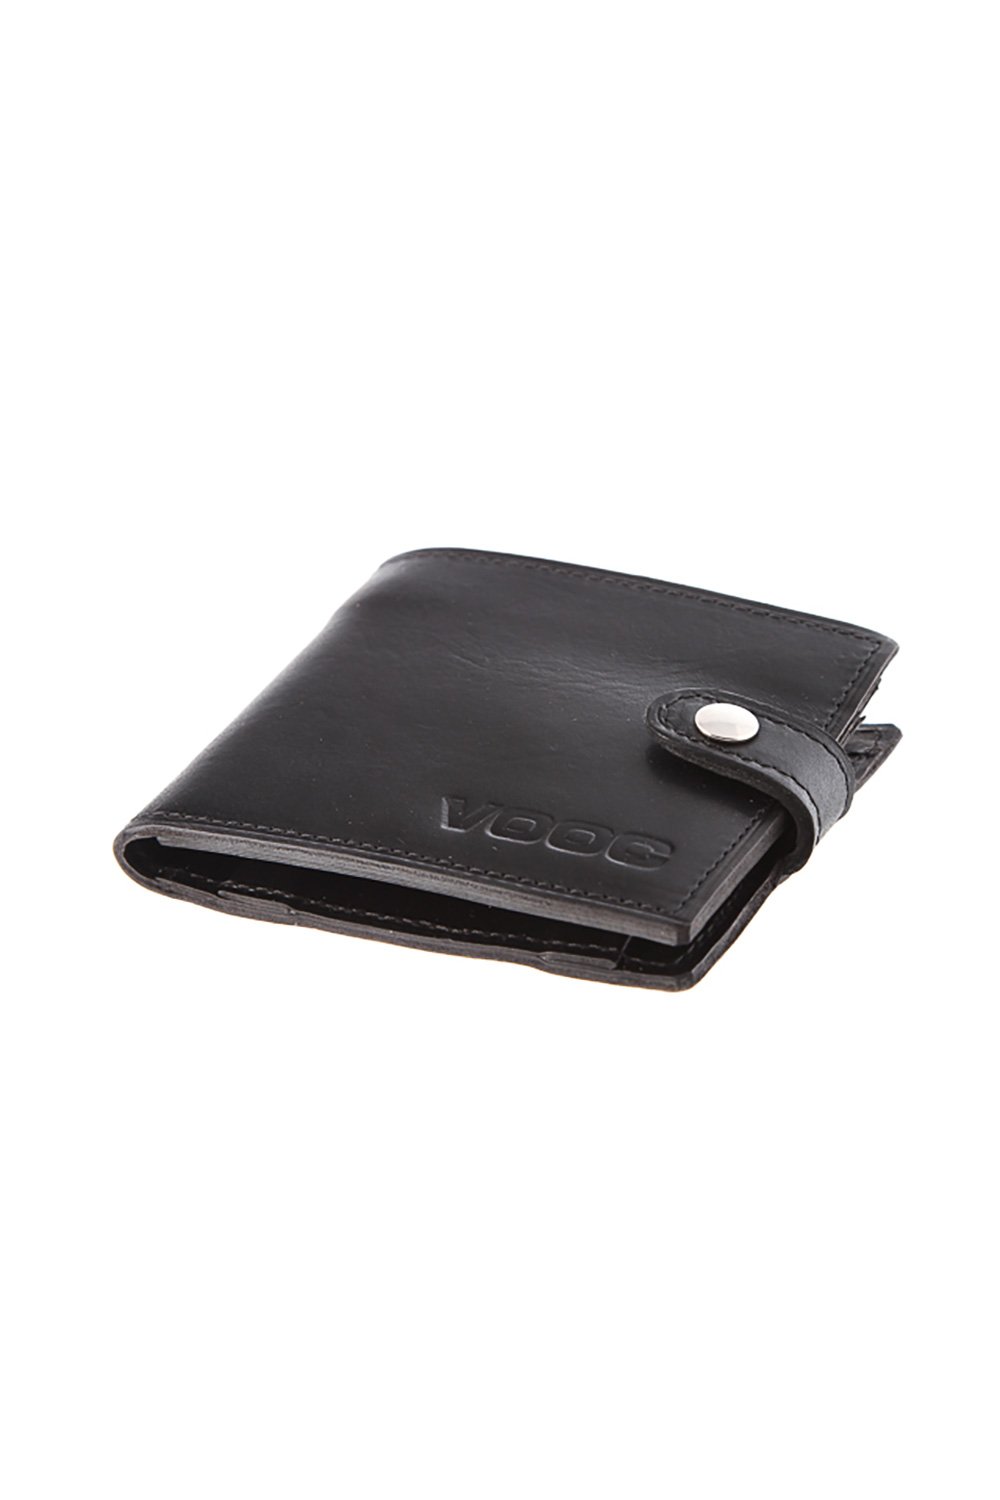 Wallet model 152152 Verosoft